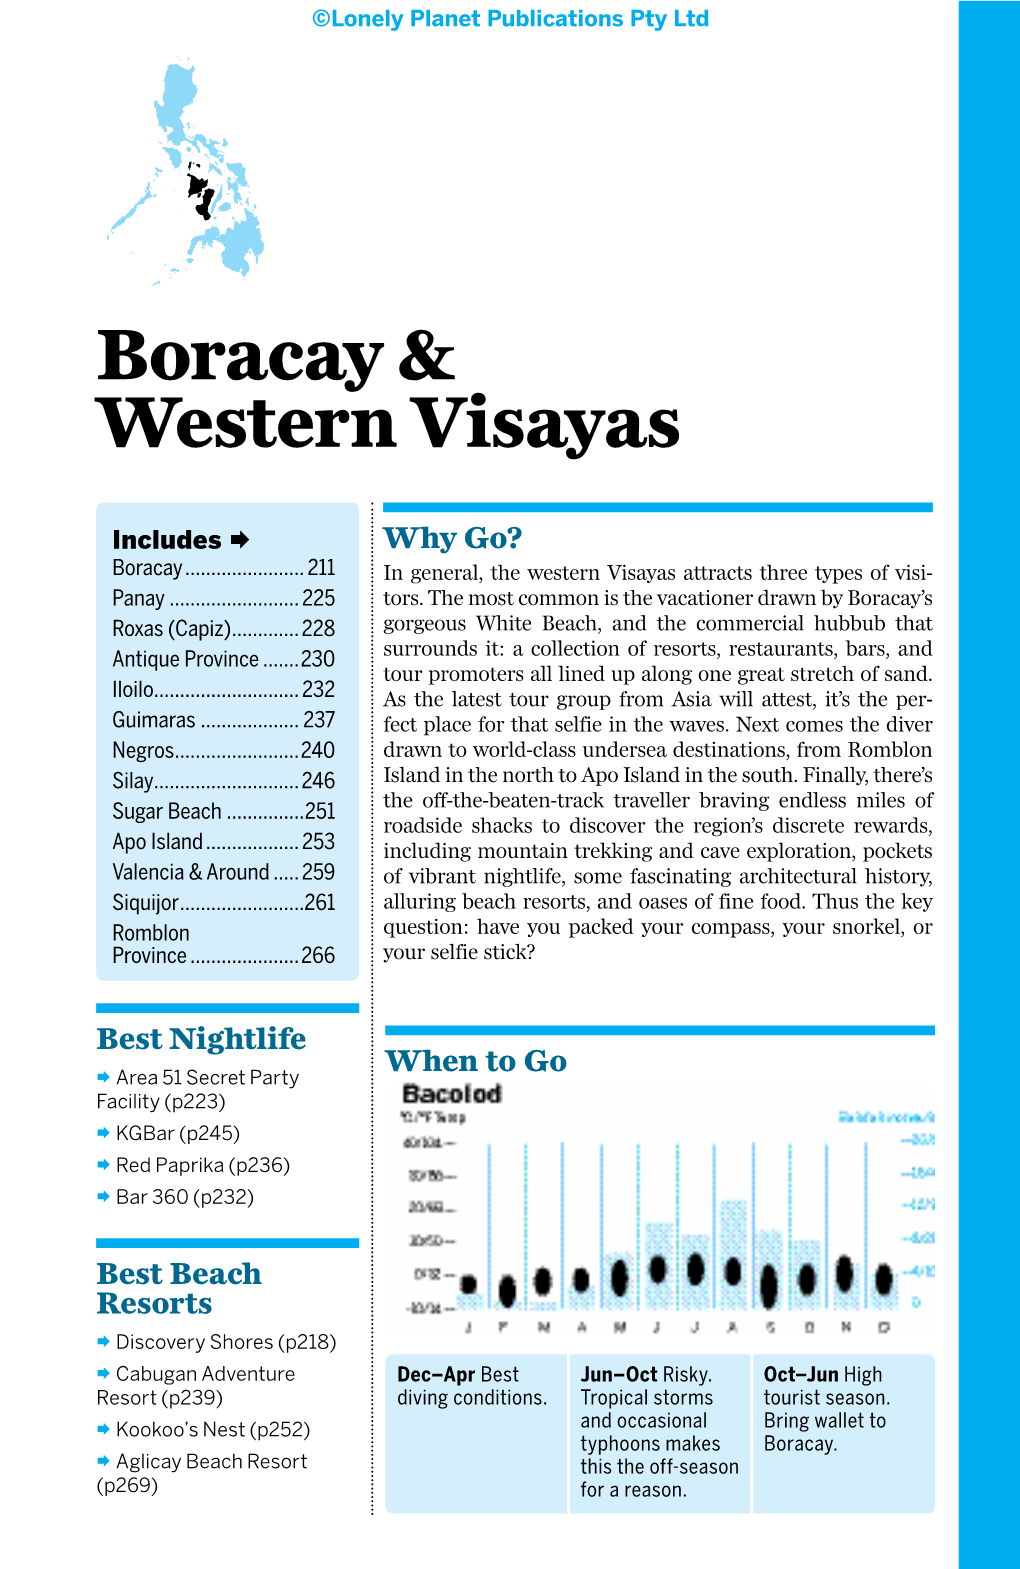 Boracay & Western Visayas